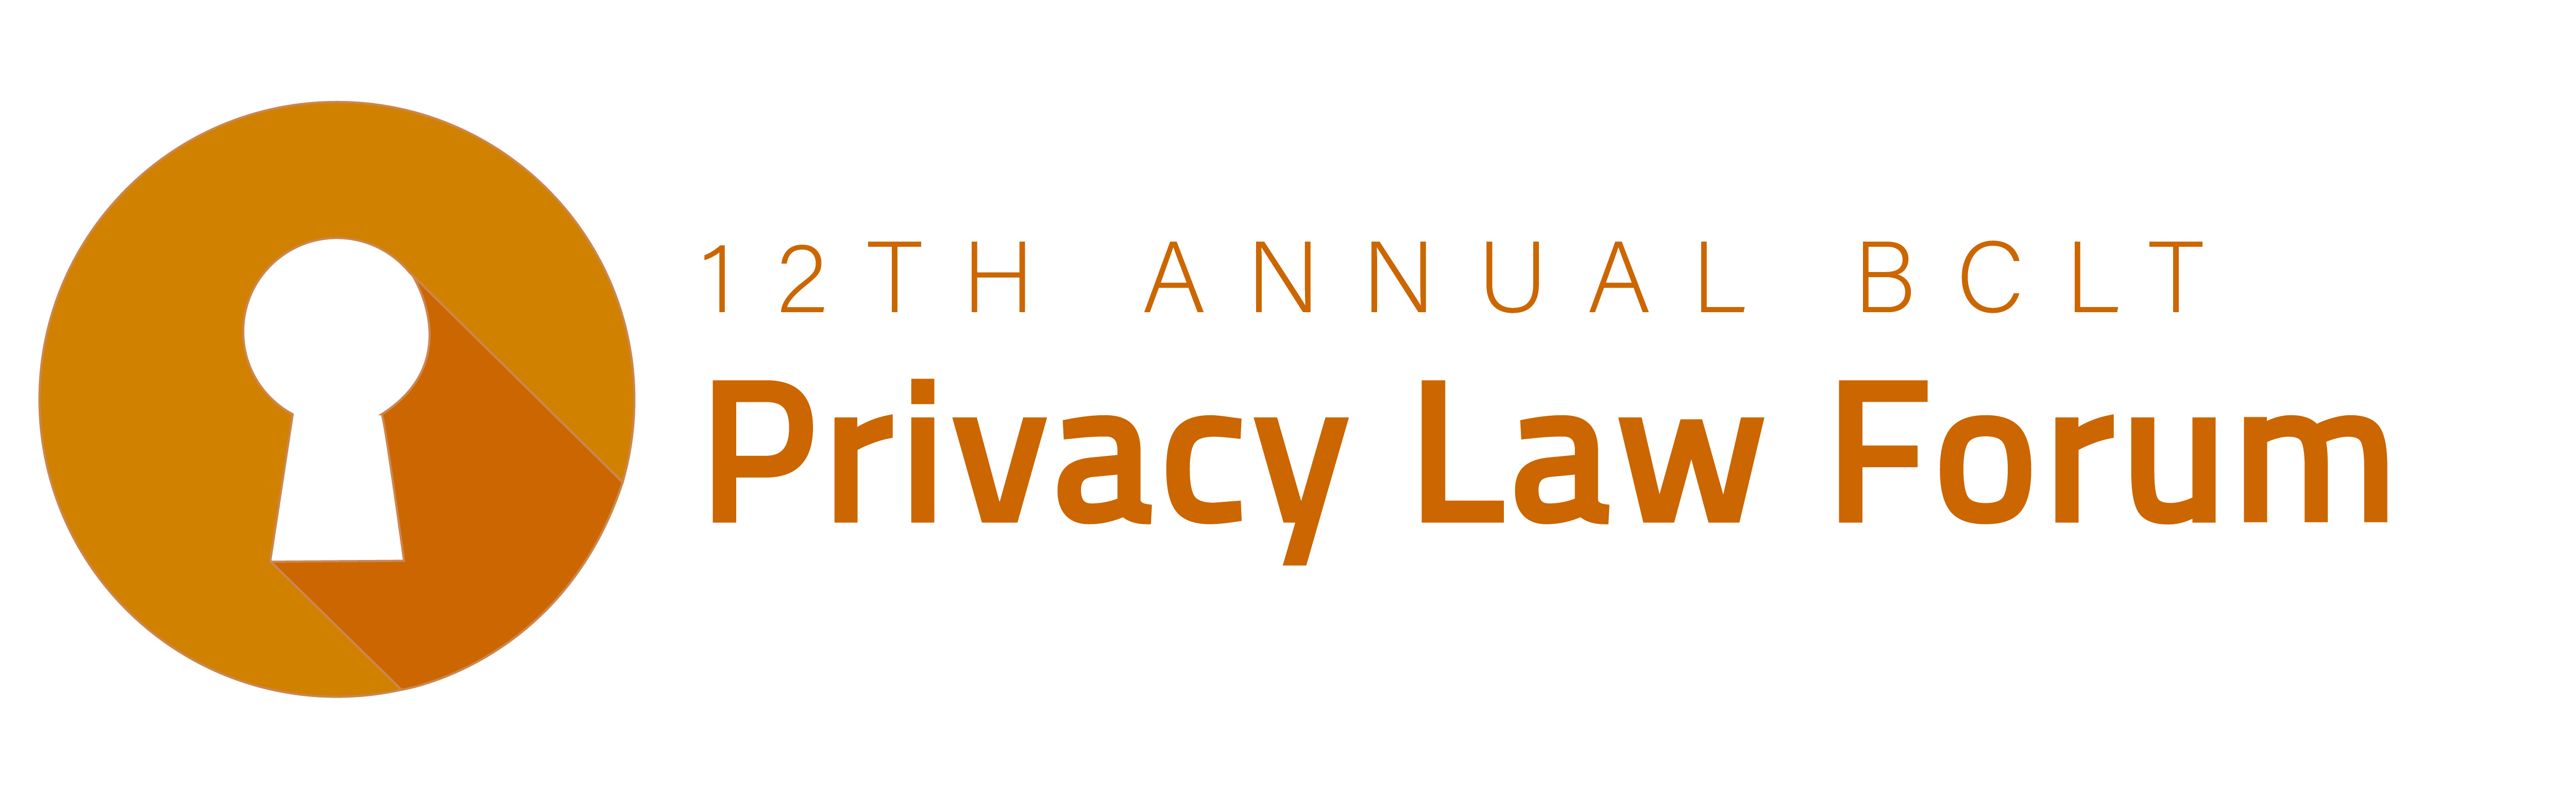 12th Privacy Law Forum logo white bg